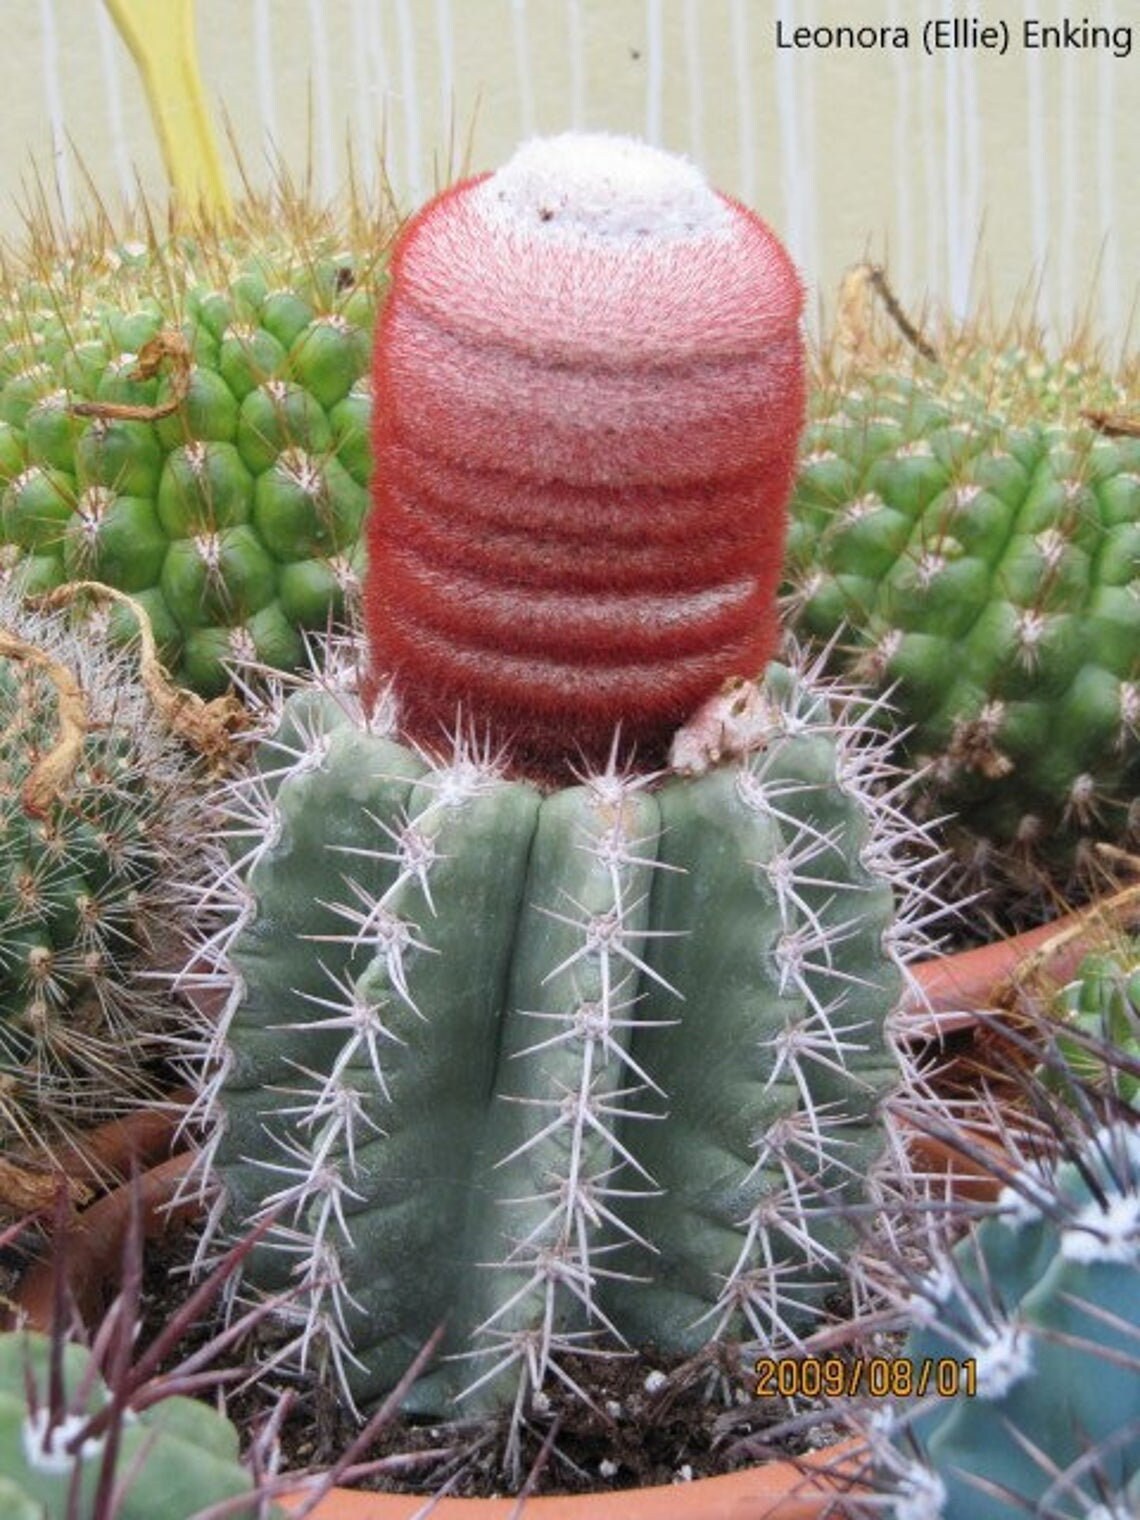 Melocactus MIX -10 Seeds - Melon Flower Cactus - Turk's Cap Fruit Cactus